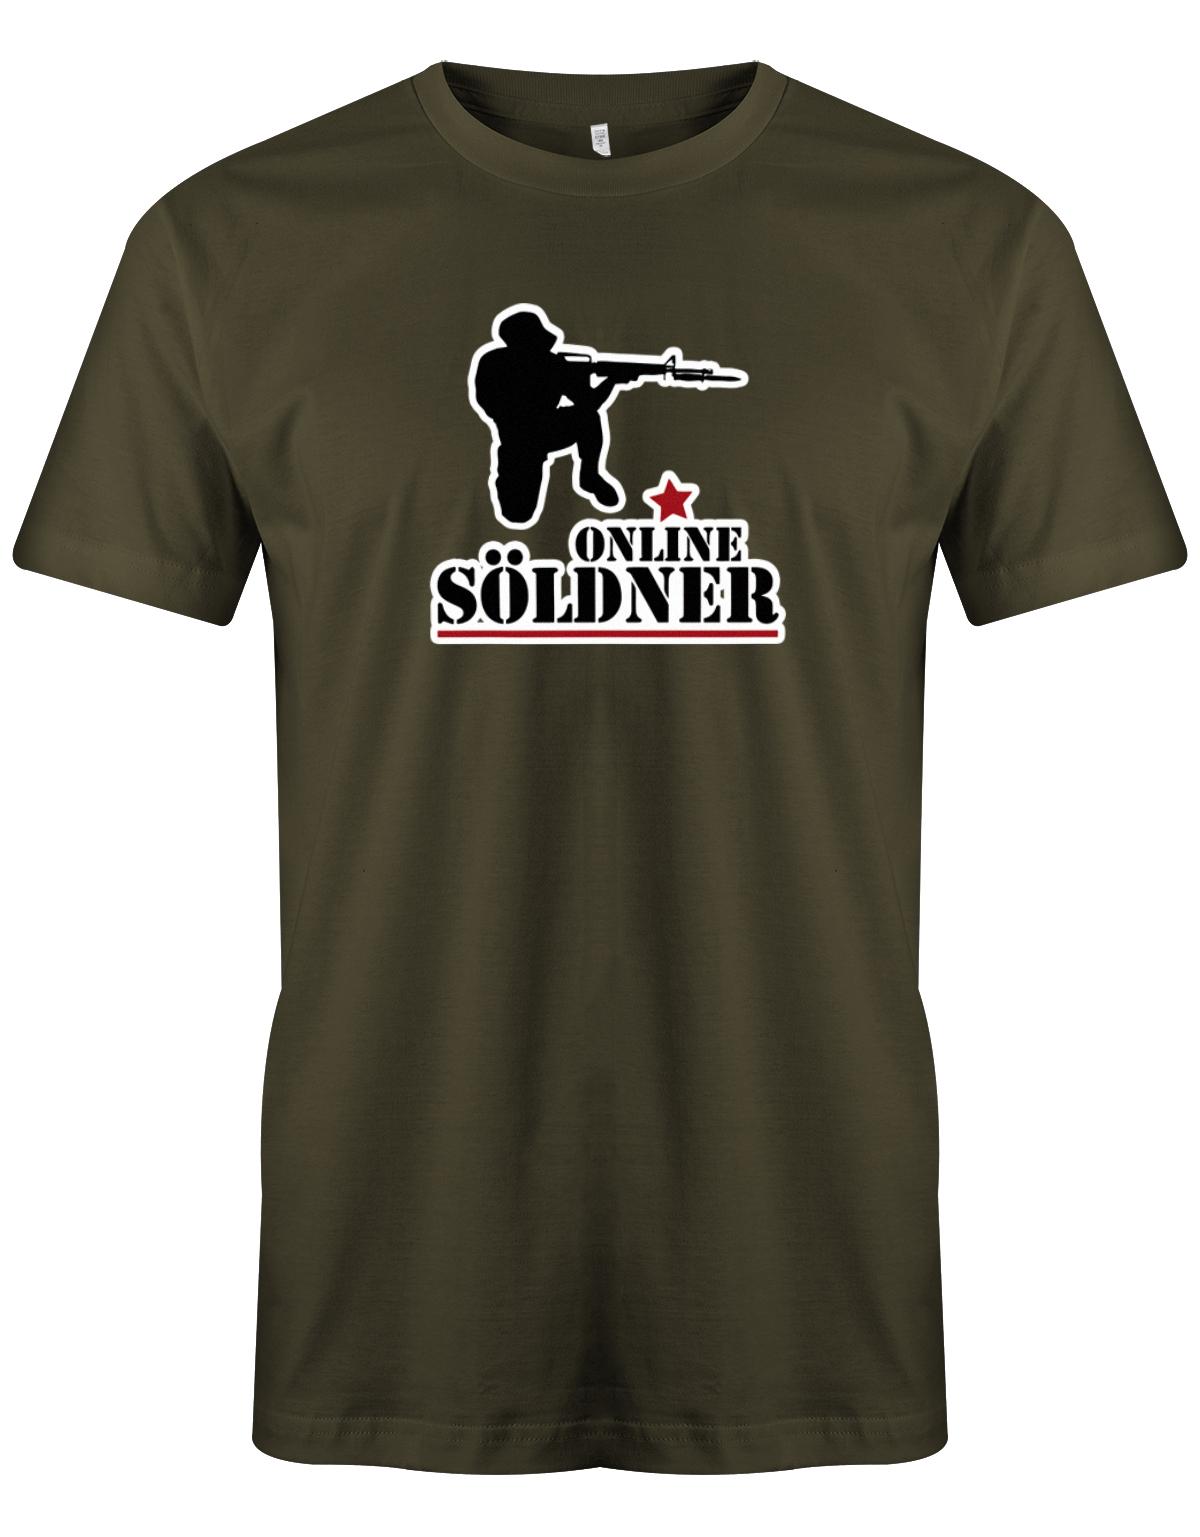 Online-S-ldner-Herren-Gamer-COD-Shirt-Army